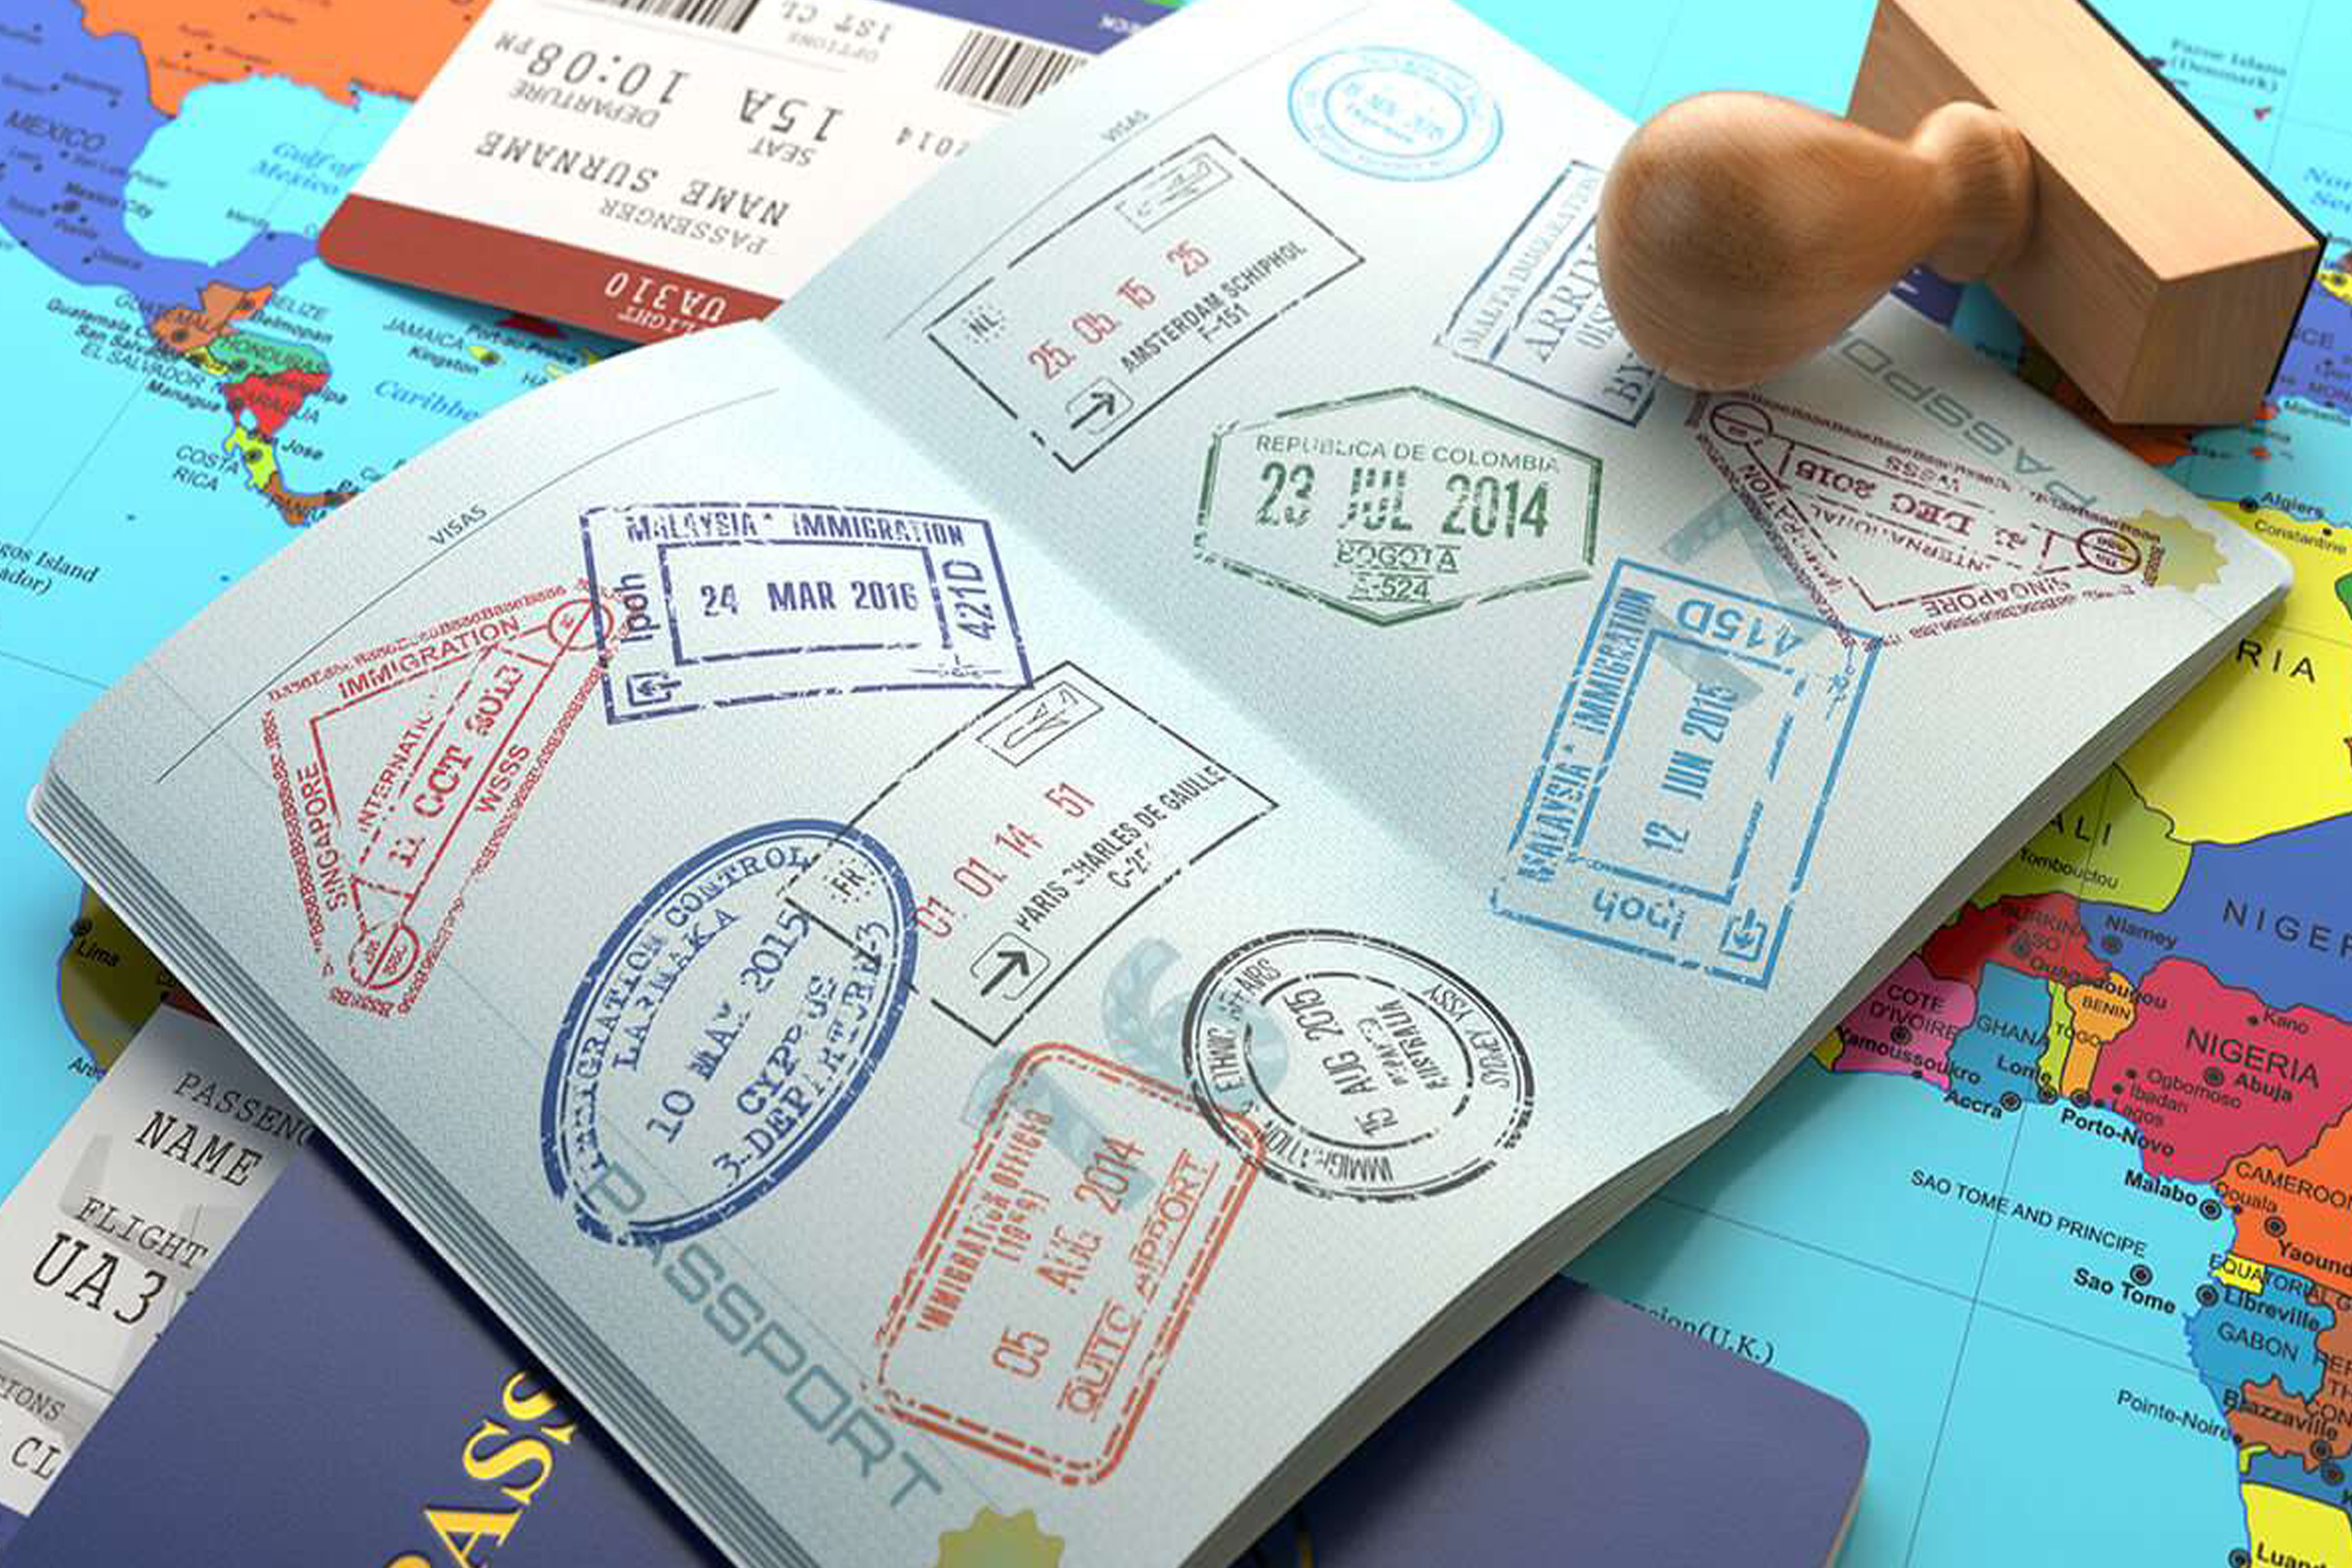 Lodging of visa applications